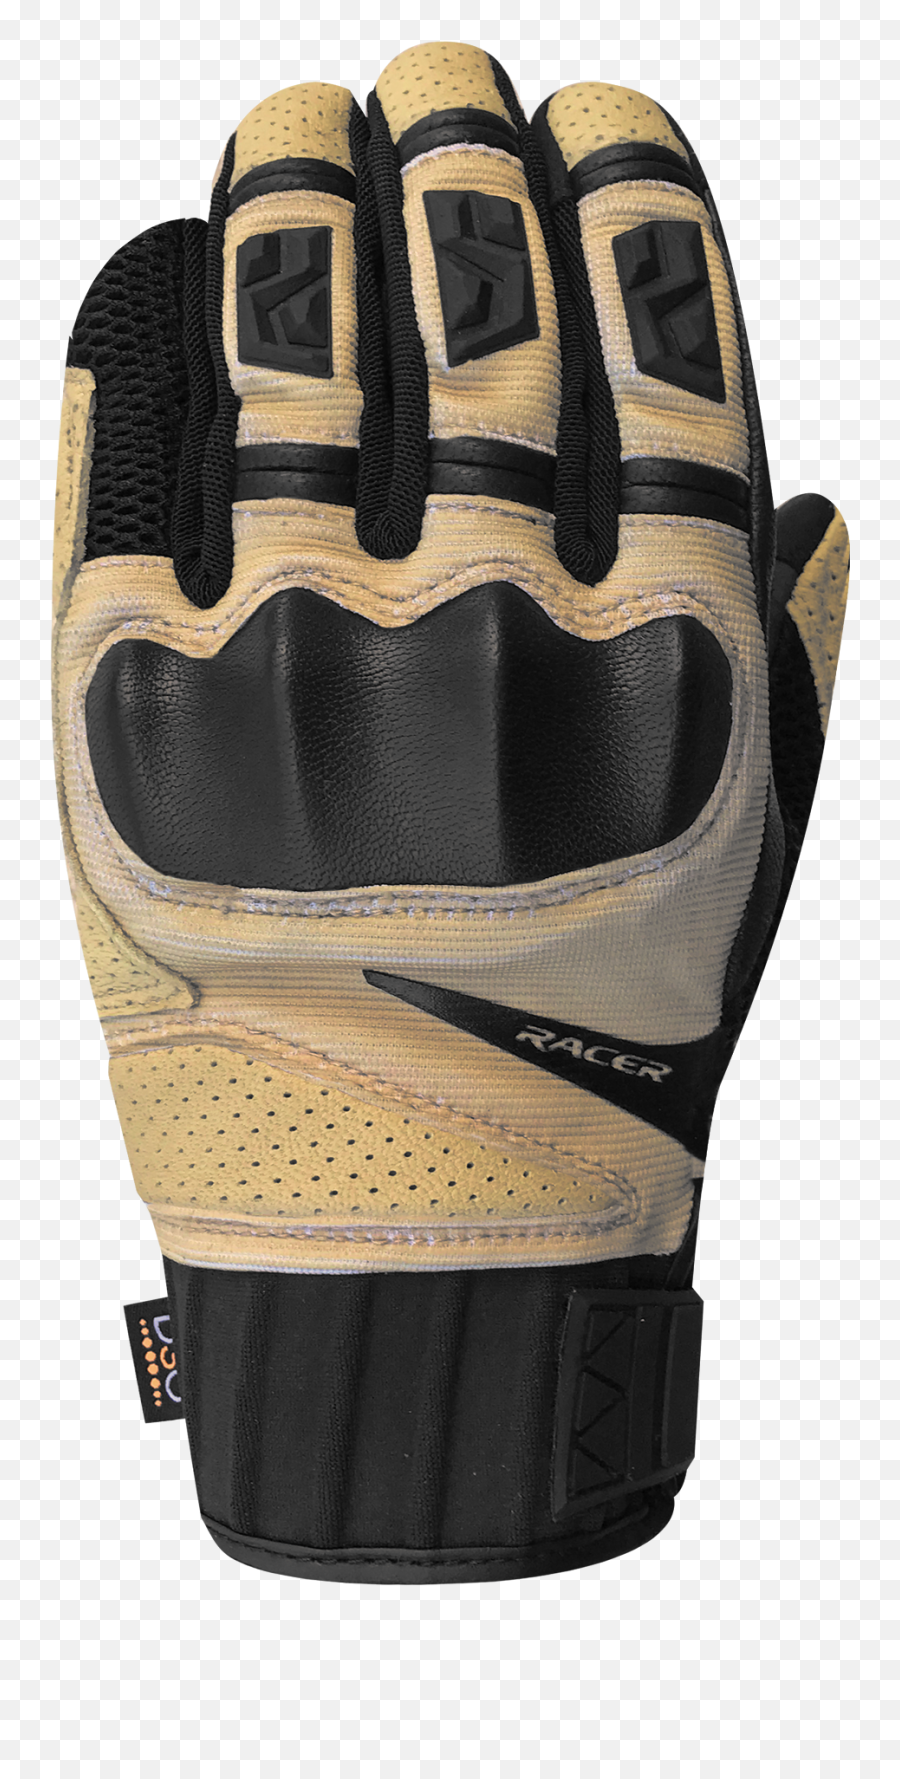 Équipement Moto 2018 La Sélection Auto - Moto Safety Glove Png,Icon Overlord Resistance Gloves